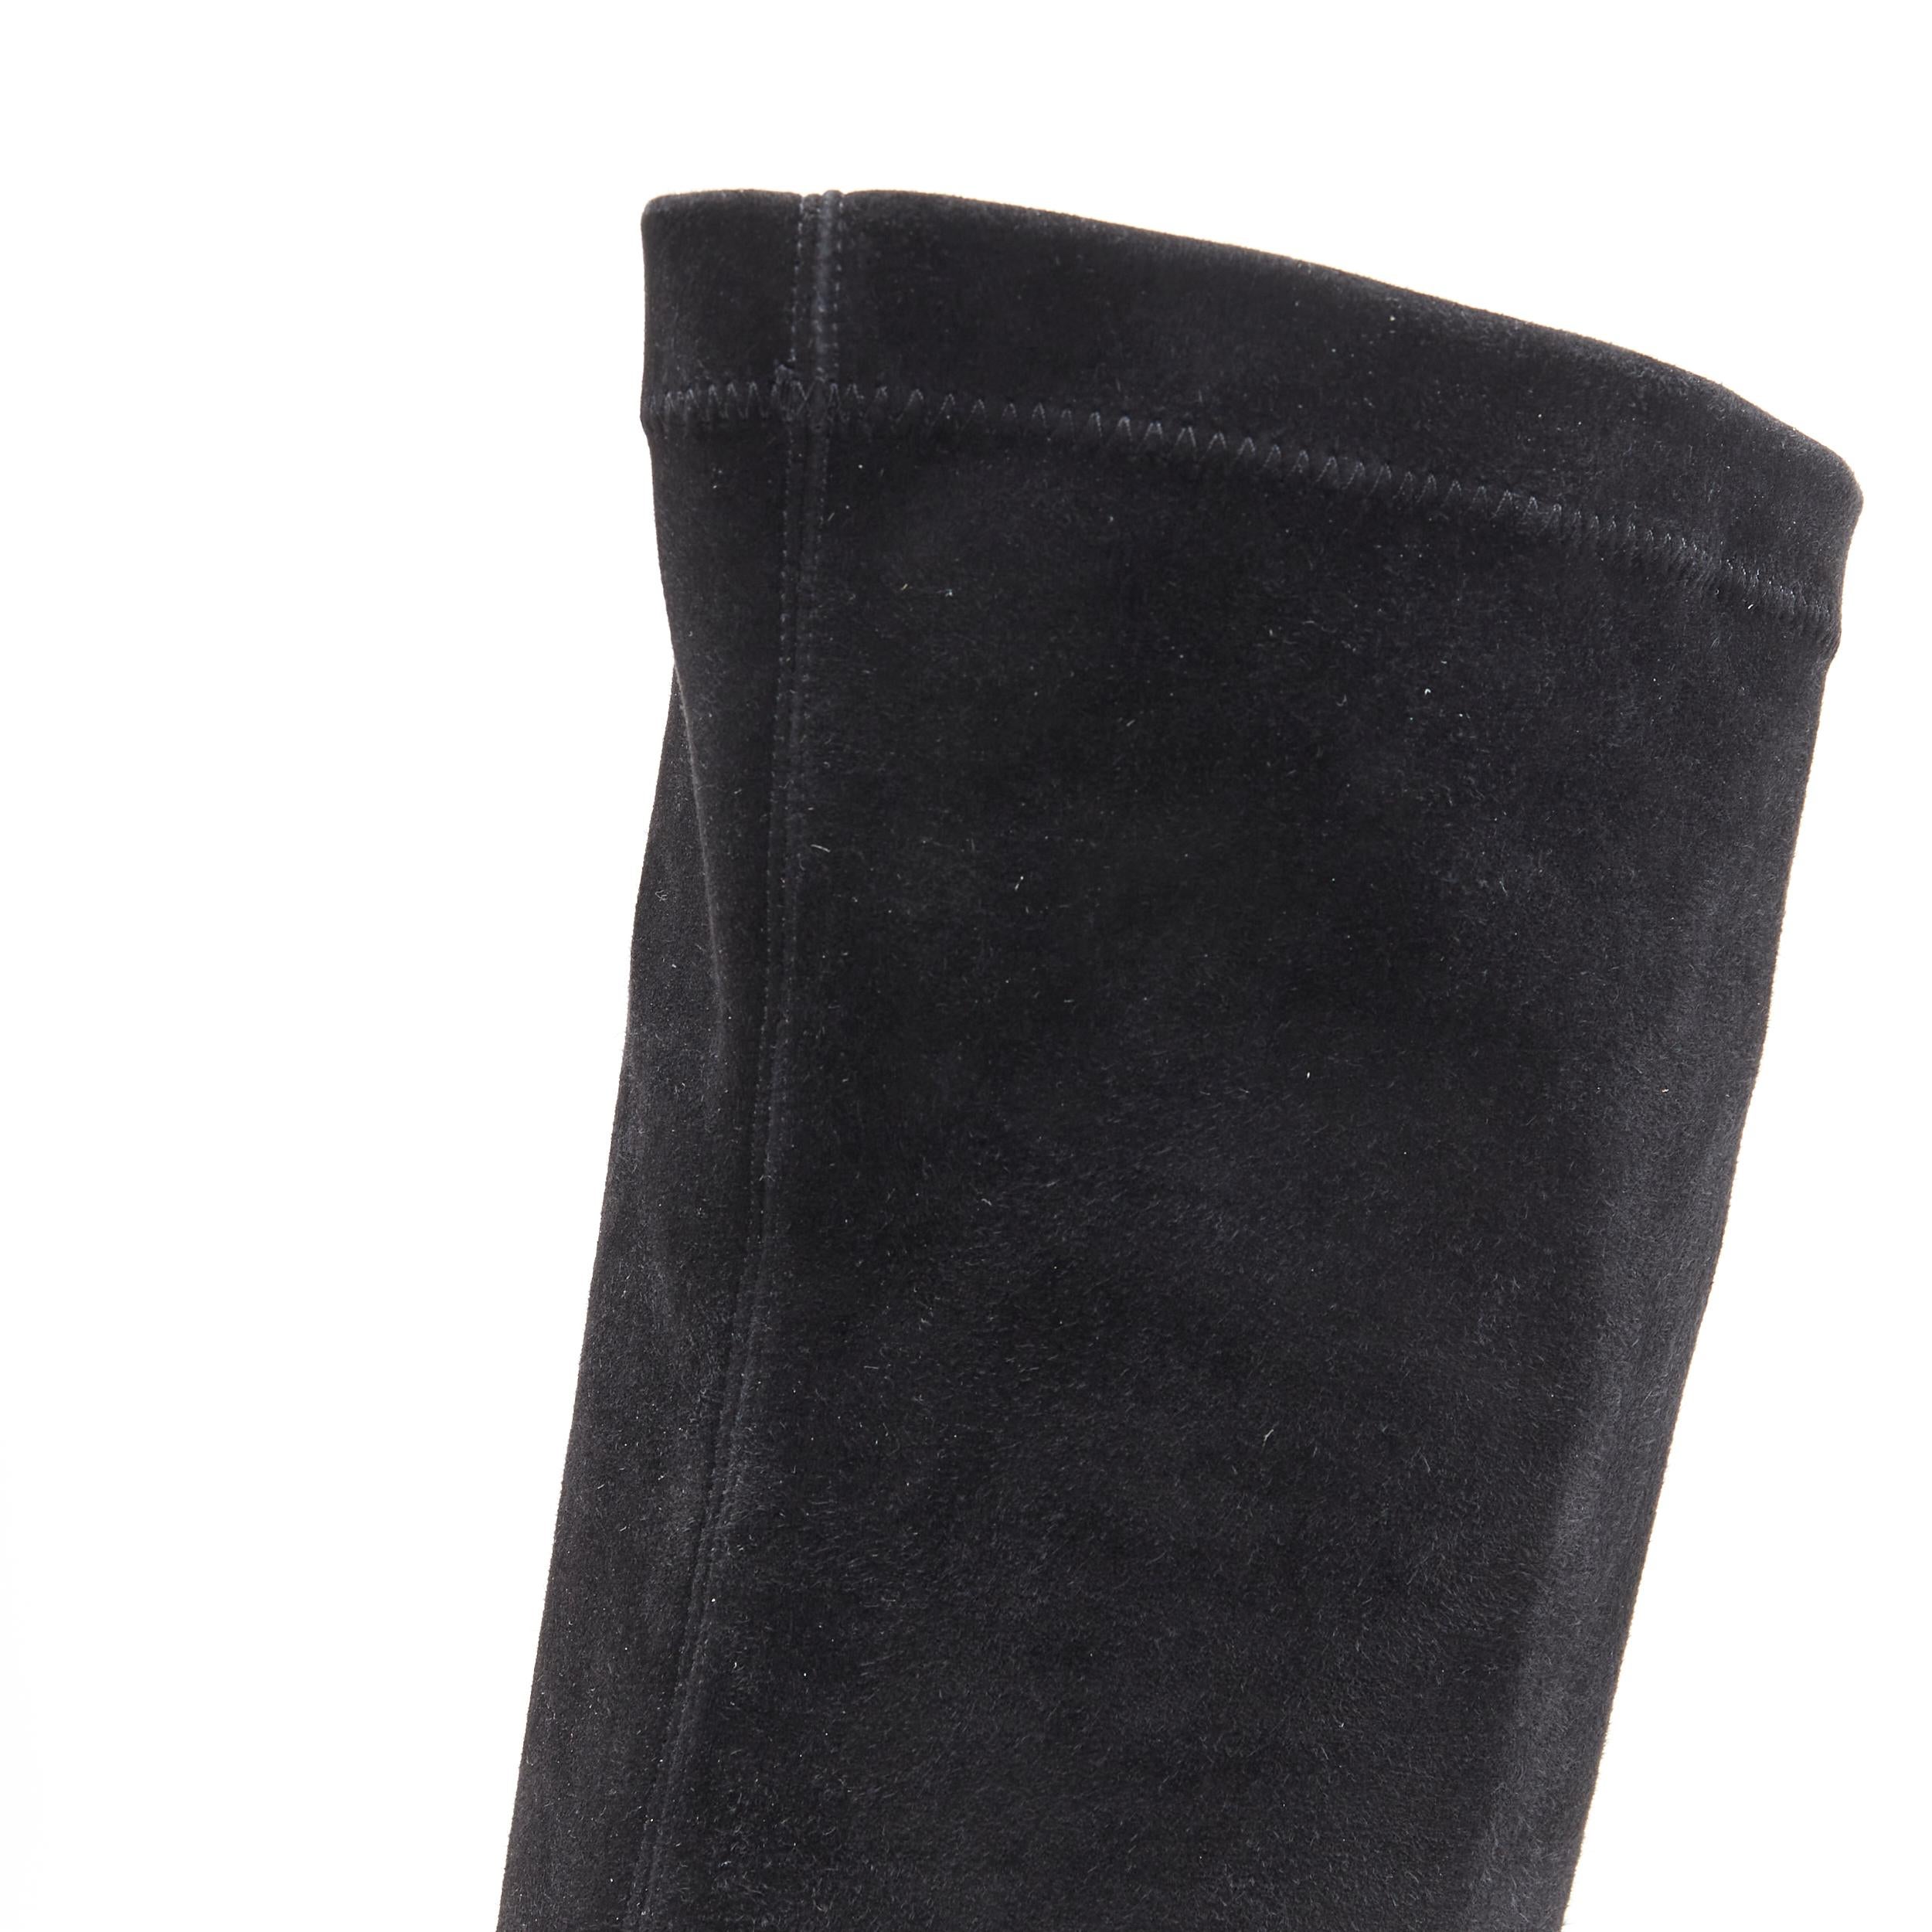 BRIAN ATWOOD black suede leather platform high heel thigh high boot EU38 2